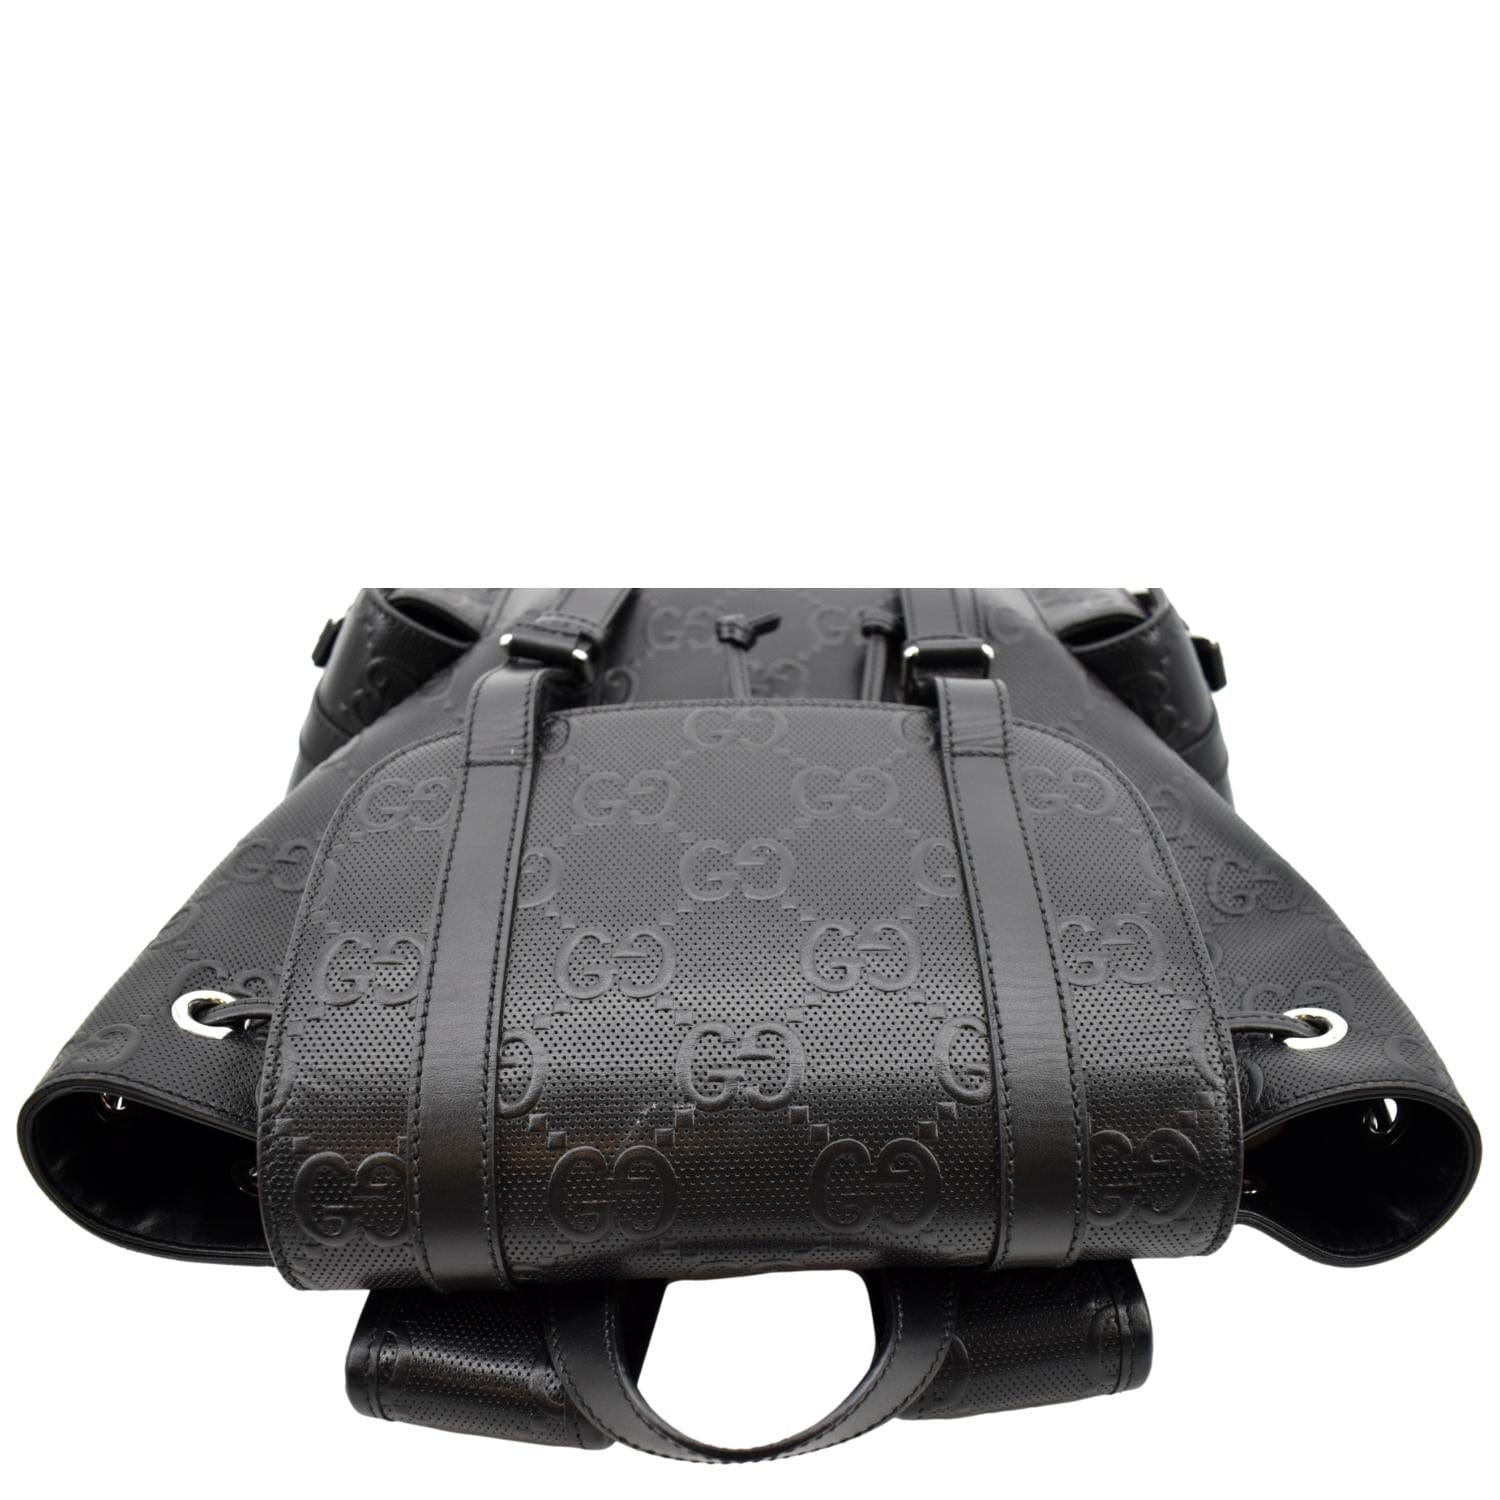 Gucci GG Embossed Backpack Medium Black